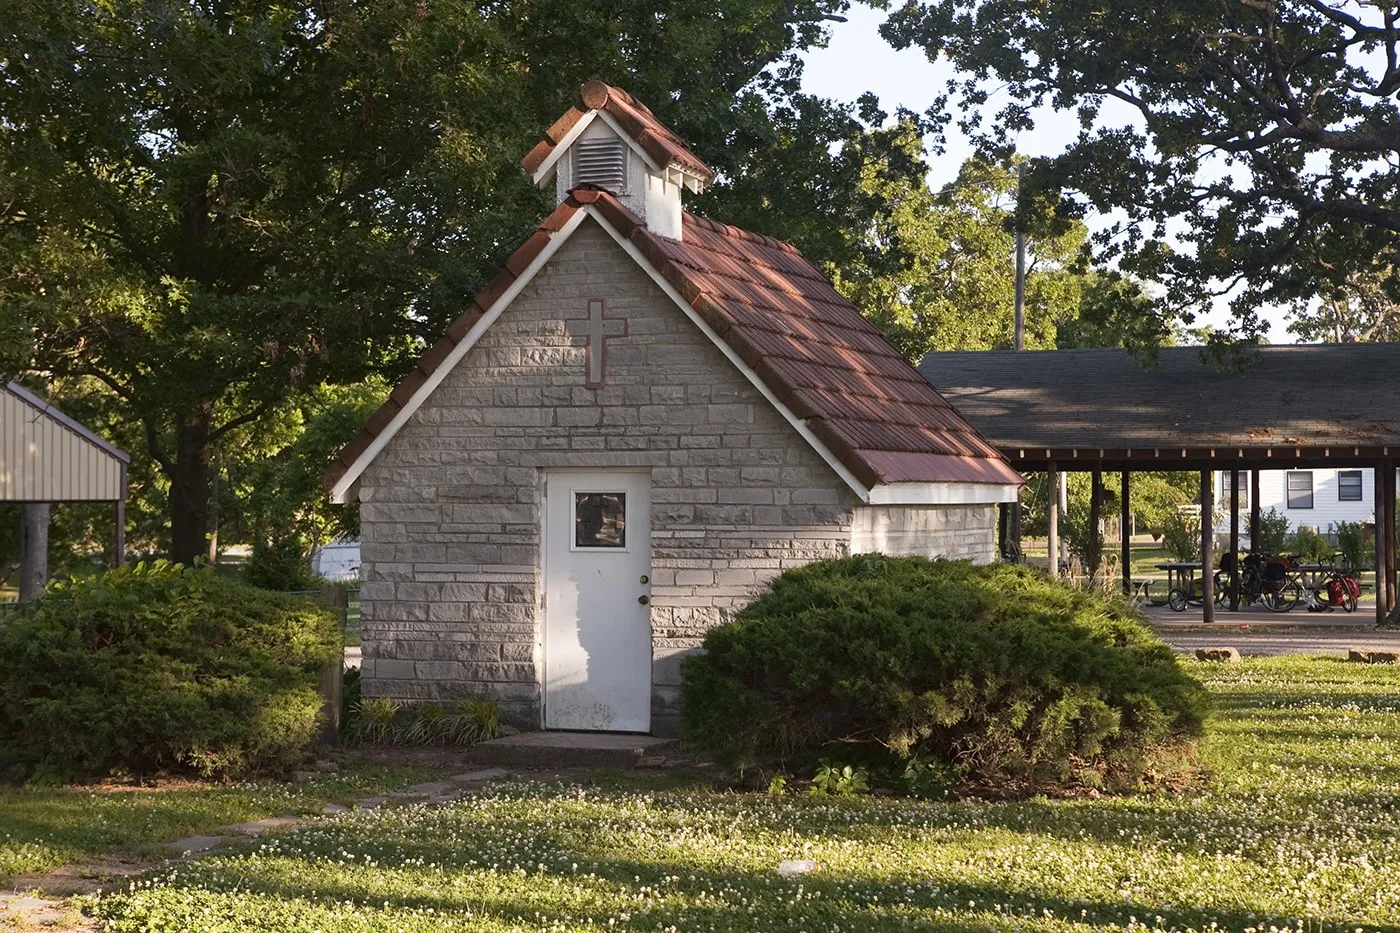 Miniature Church in Golden City, Missouri